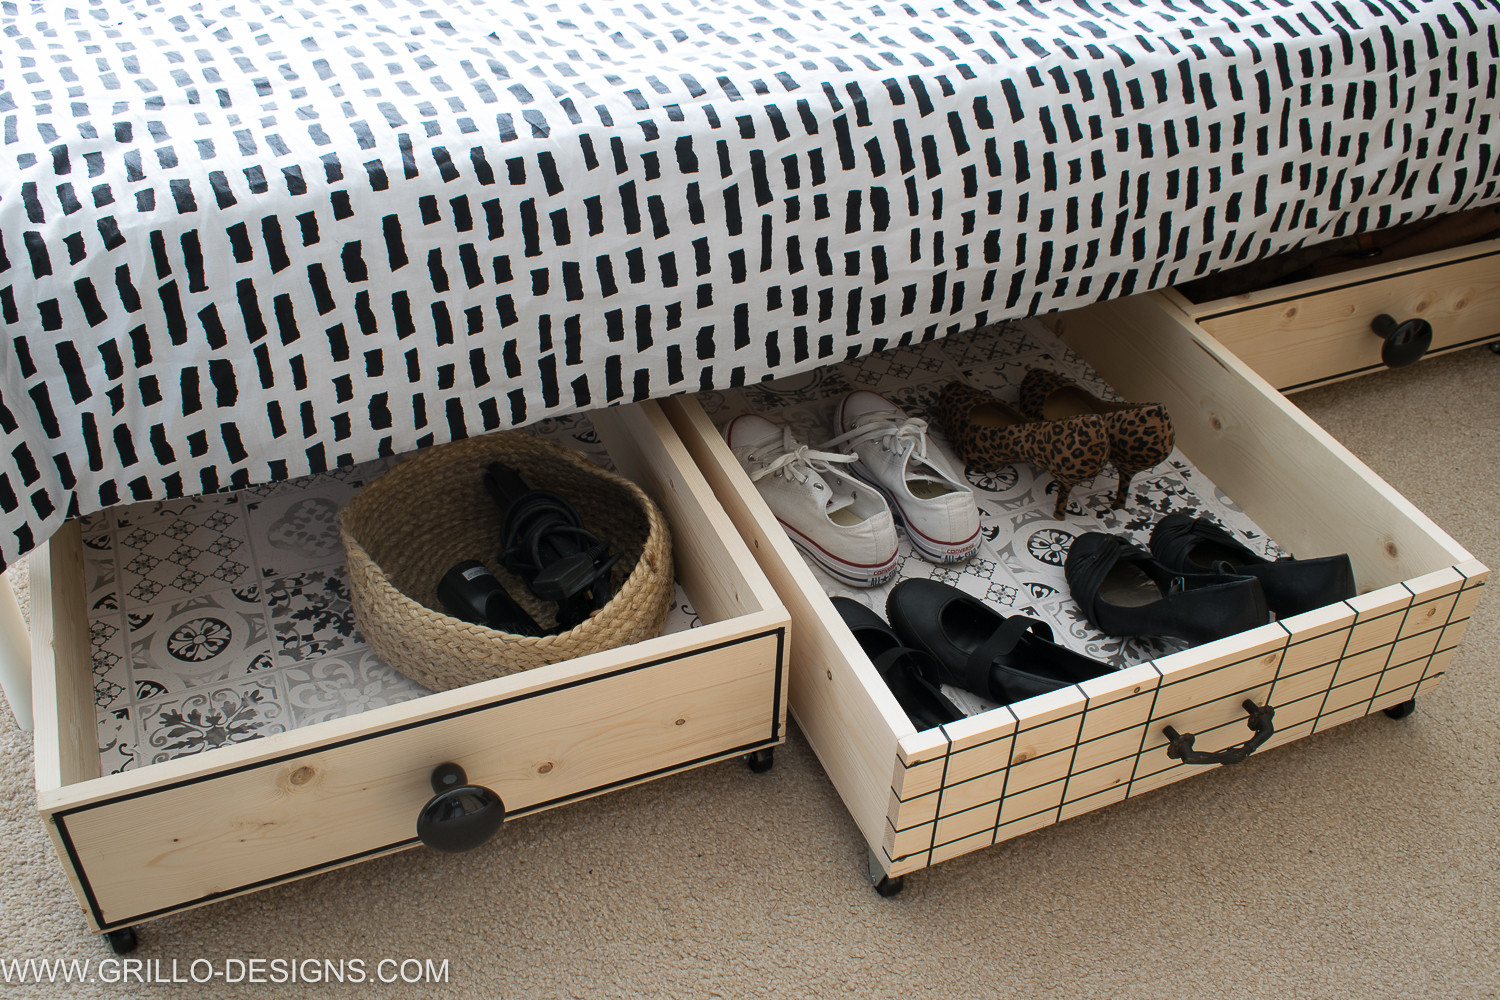 Best ideas about DIY Under Bed Storage
. Save or Pin DIY Under Bed Storage Boxes a knobs guide • Grillo Designs Now.